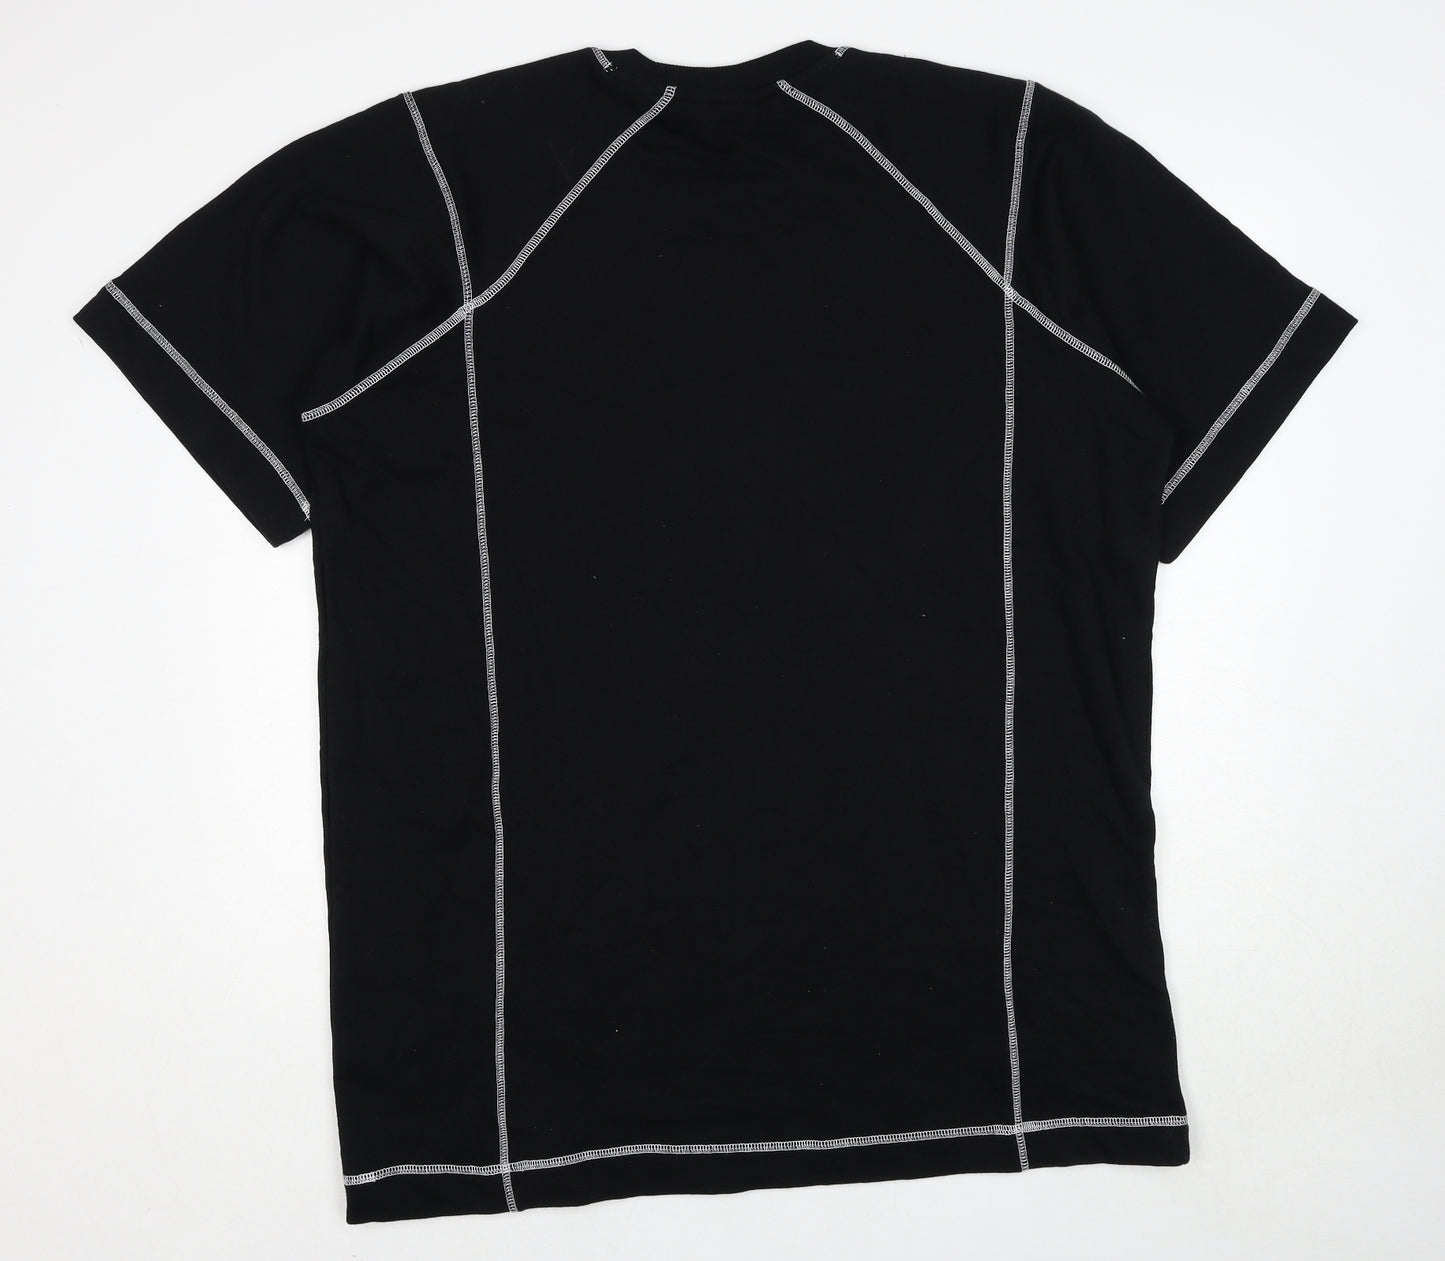 ASOS Womens Black Cotton T-Shirt Dress Size 10 Round Neck Pullover